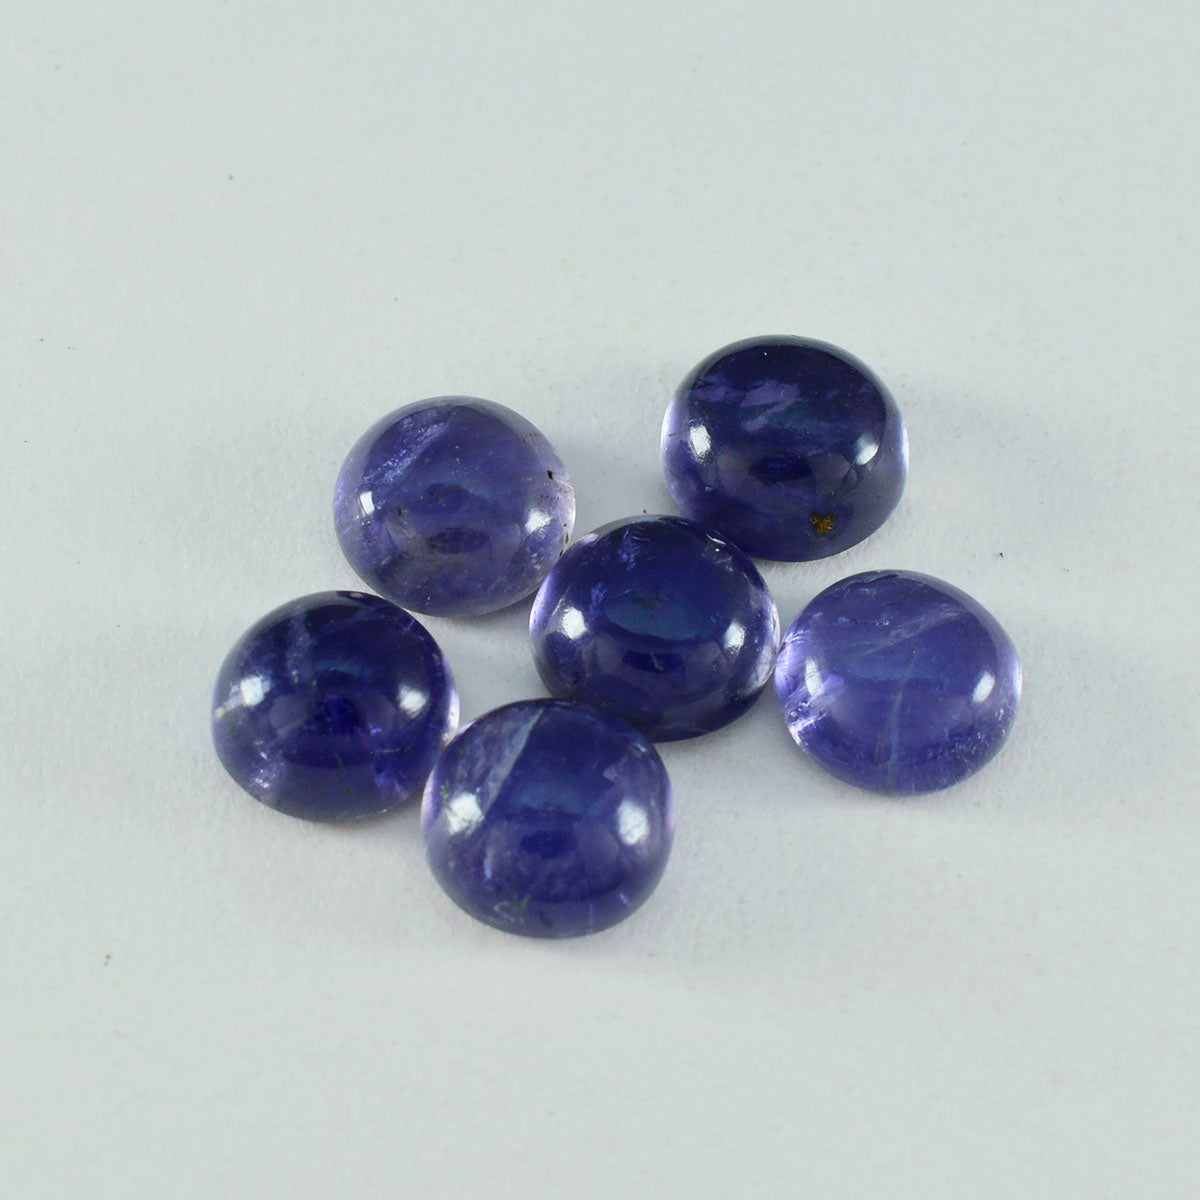 riyogems 1pc cabochon di iolite blu 15x15 mm gemma sfusa di forma rotonda di bella qualità